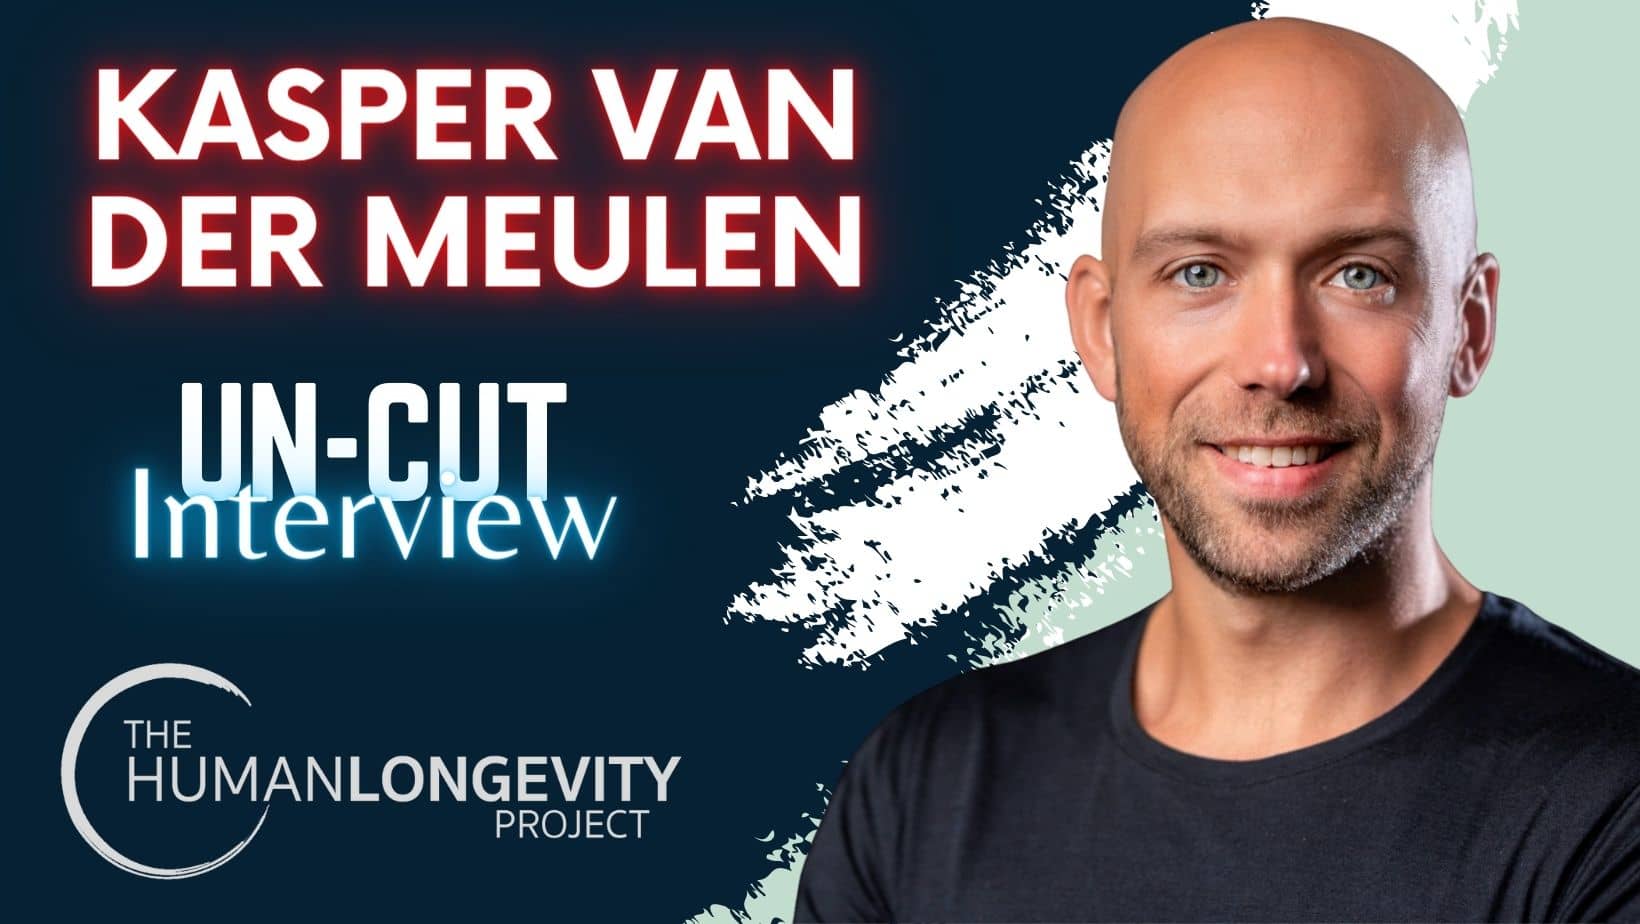 Human Longevity Project Uncut Interview With Kasper Van Der Meulen